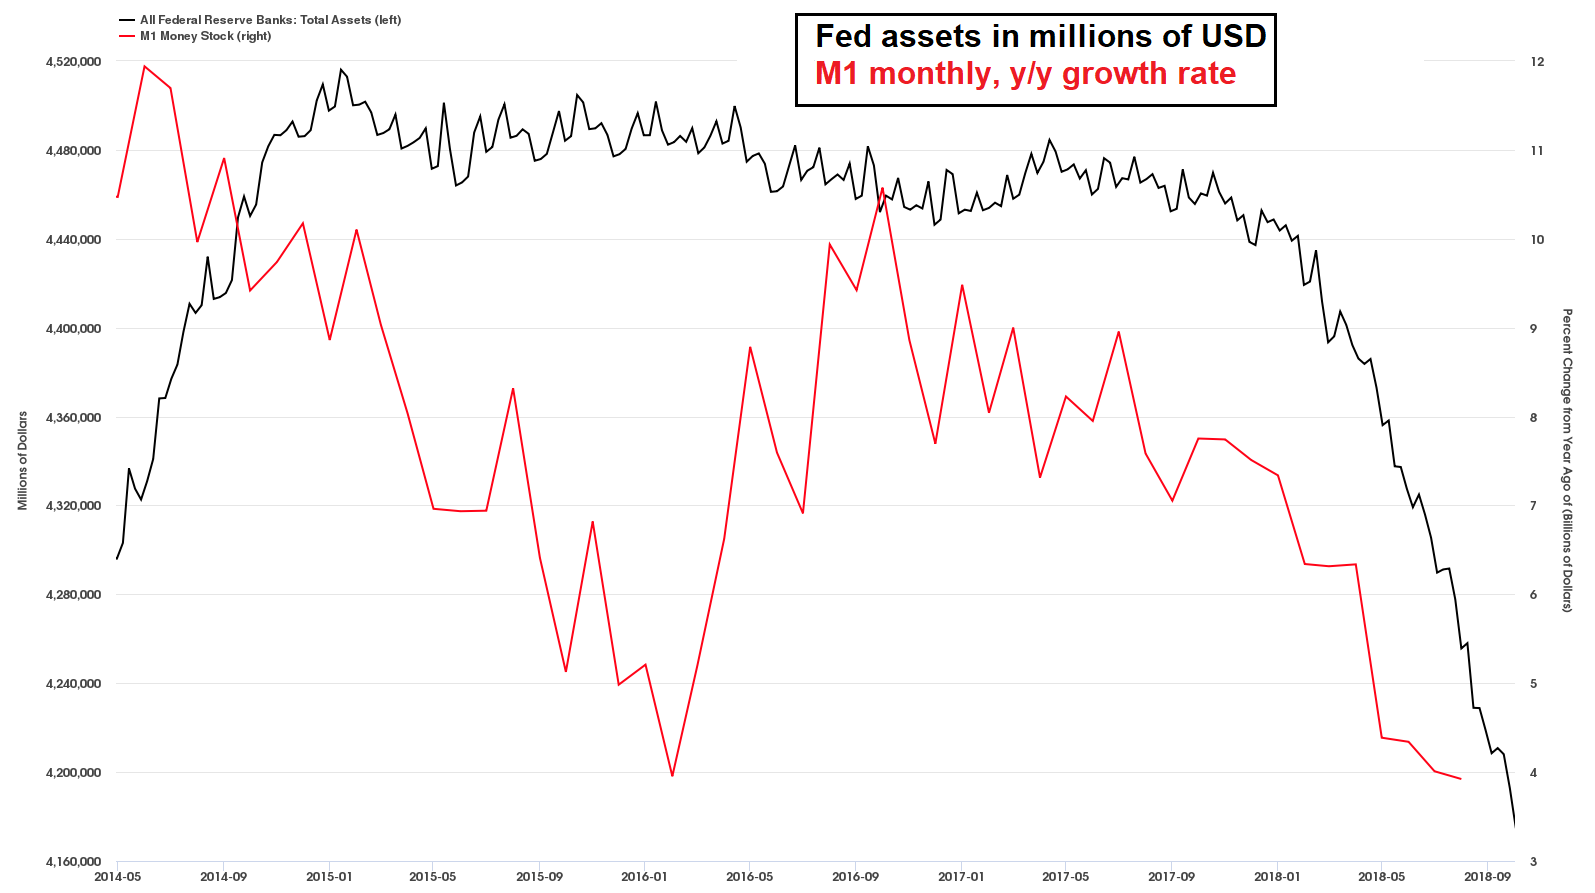 All Federal Reserve Banks Total Assets